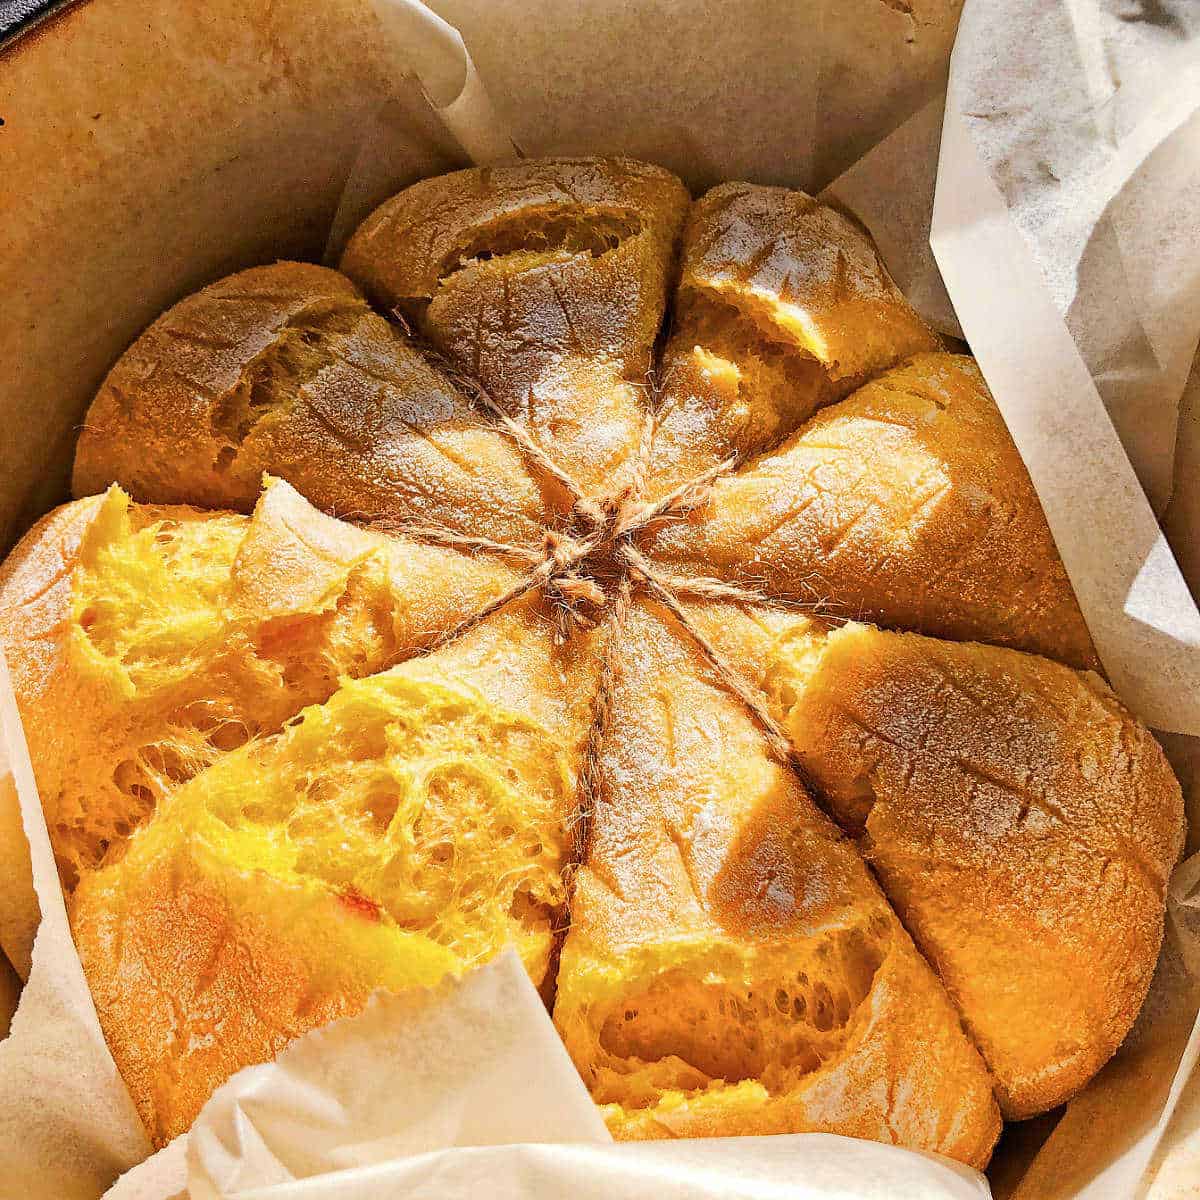 Sourdough pumpkin bread baked in a Dutch oven.